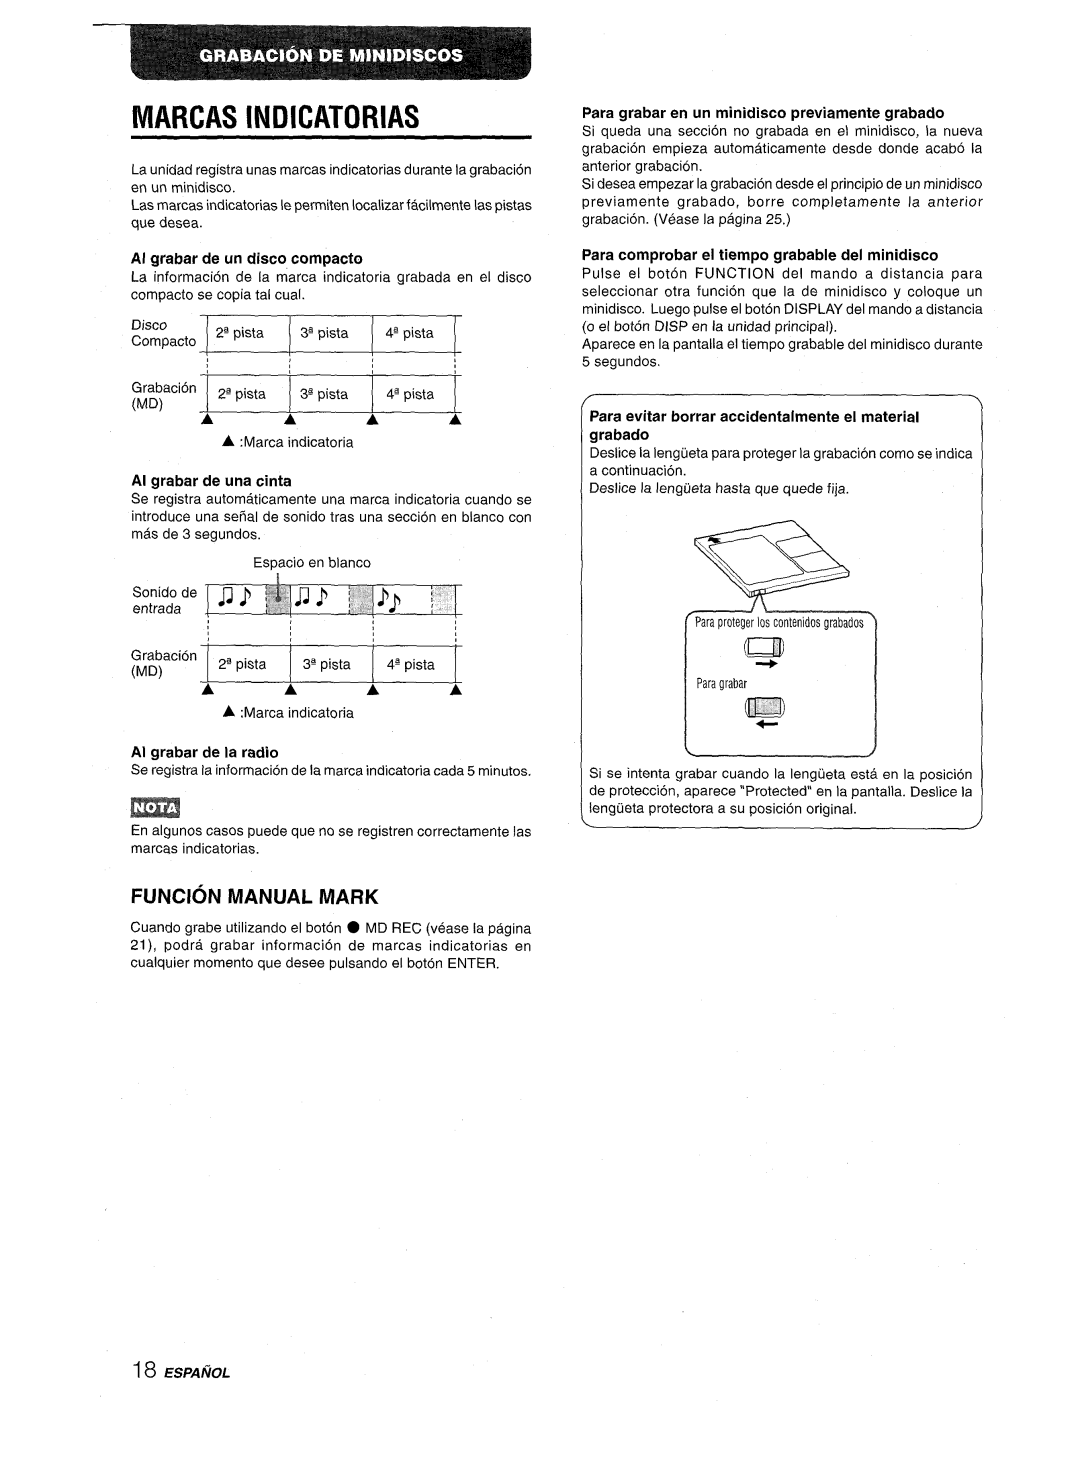 Aiwa CSD-MD50 manual Marcas Indicatorias, Funcion Manual Mark, Al grabar de una cinta, Al grabar de la radio, ESPAfiOL 